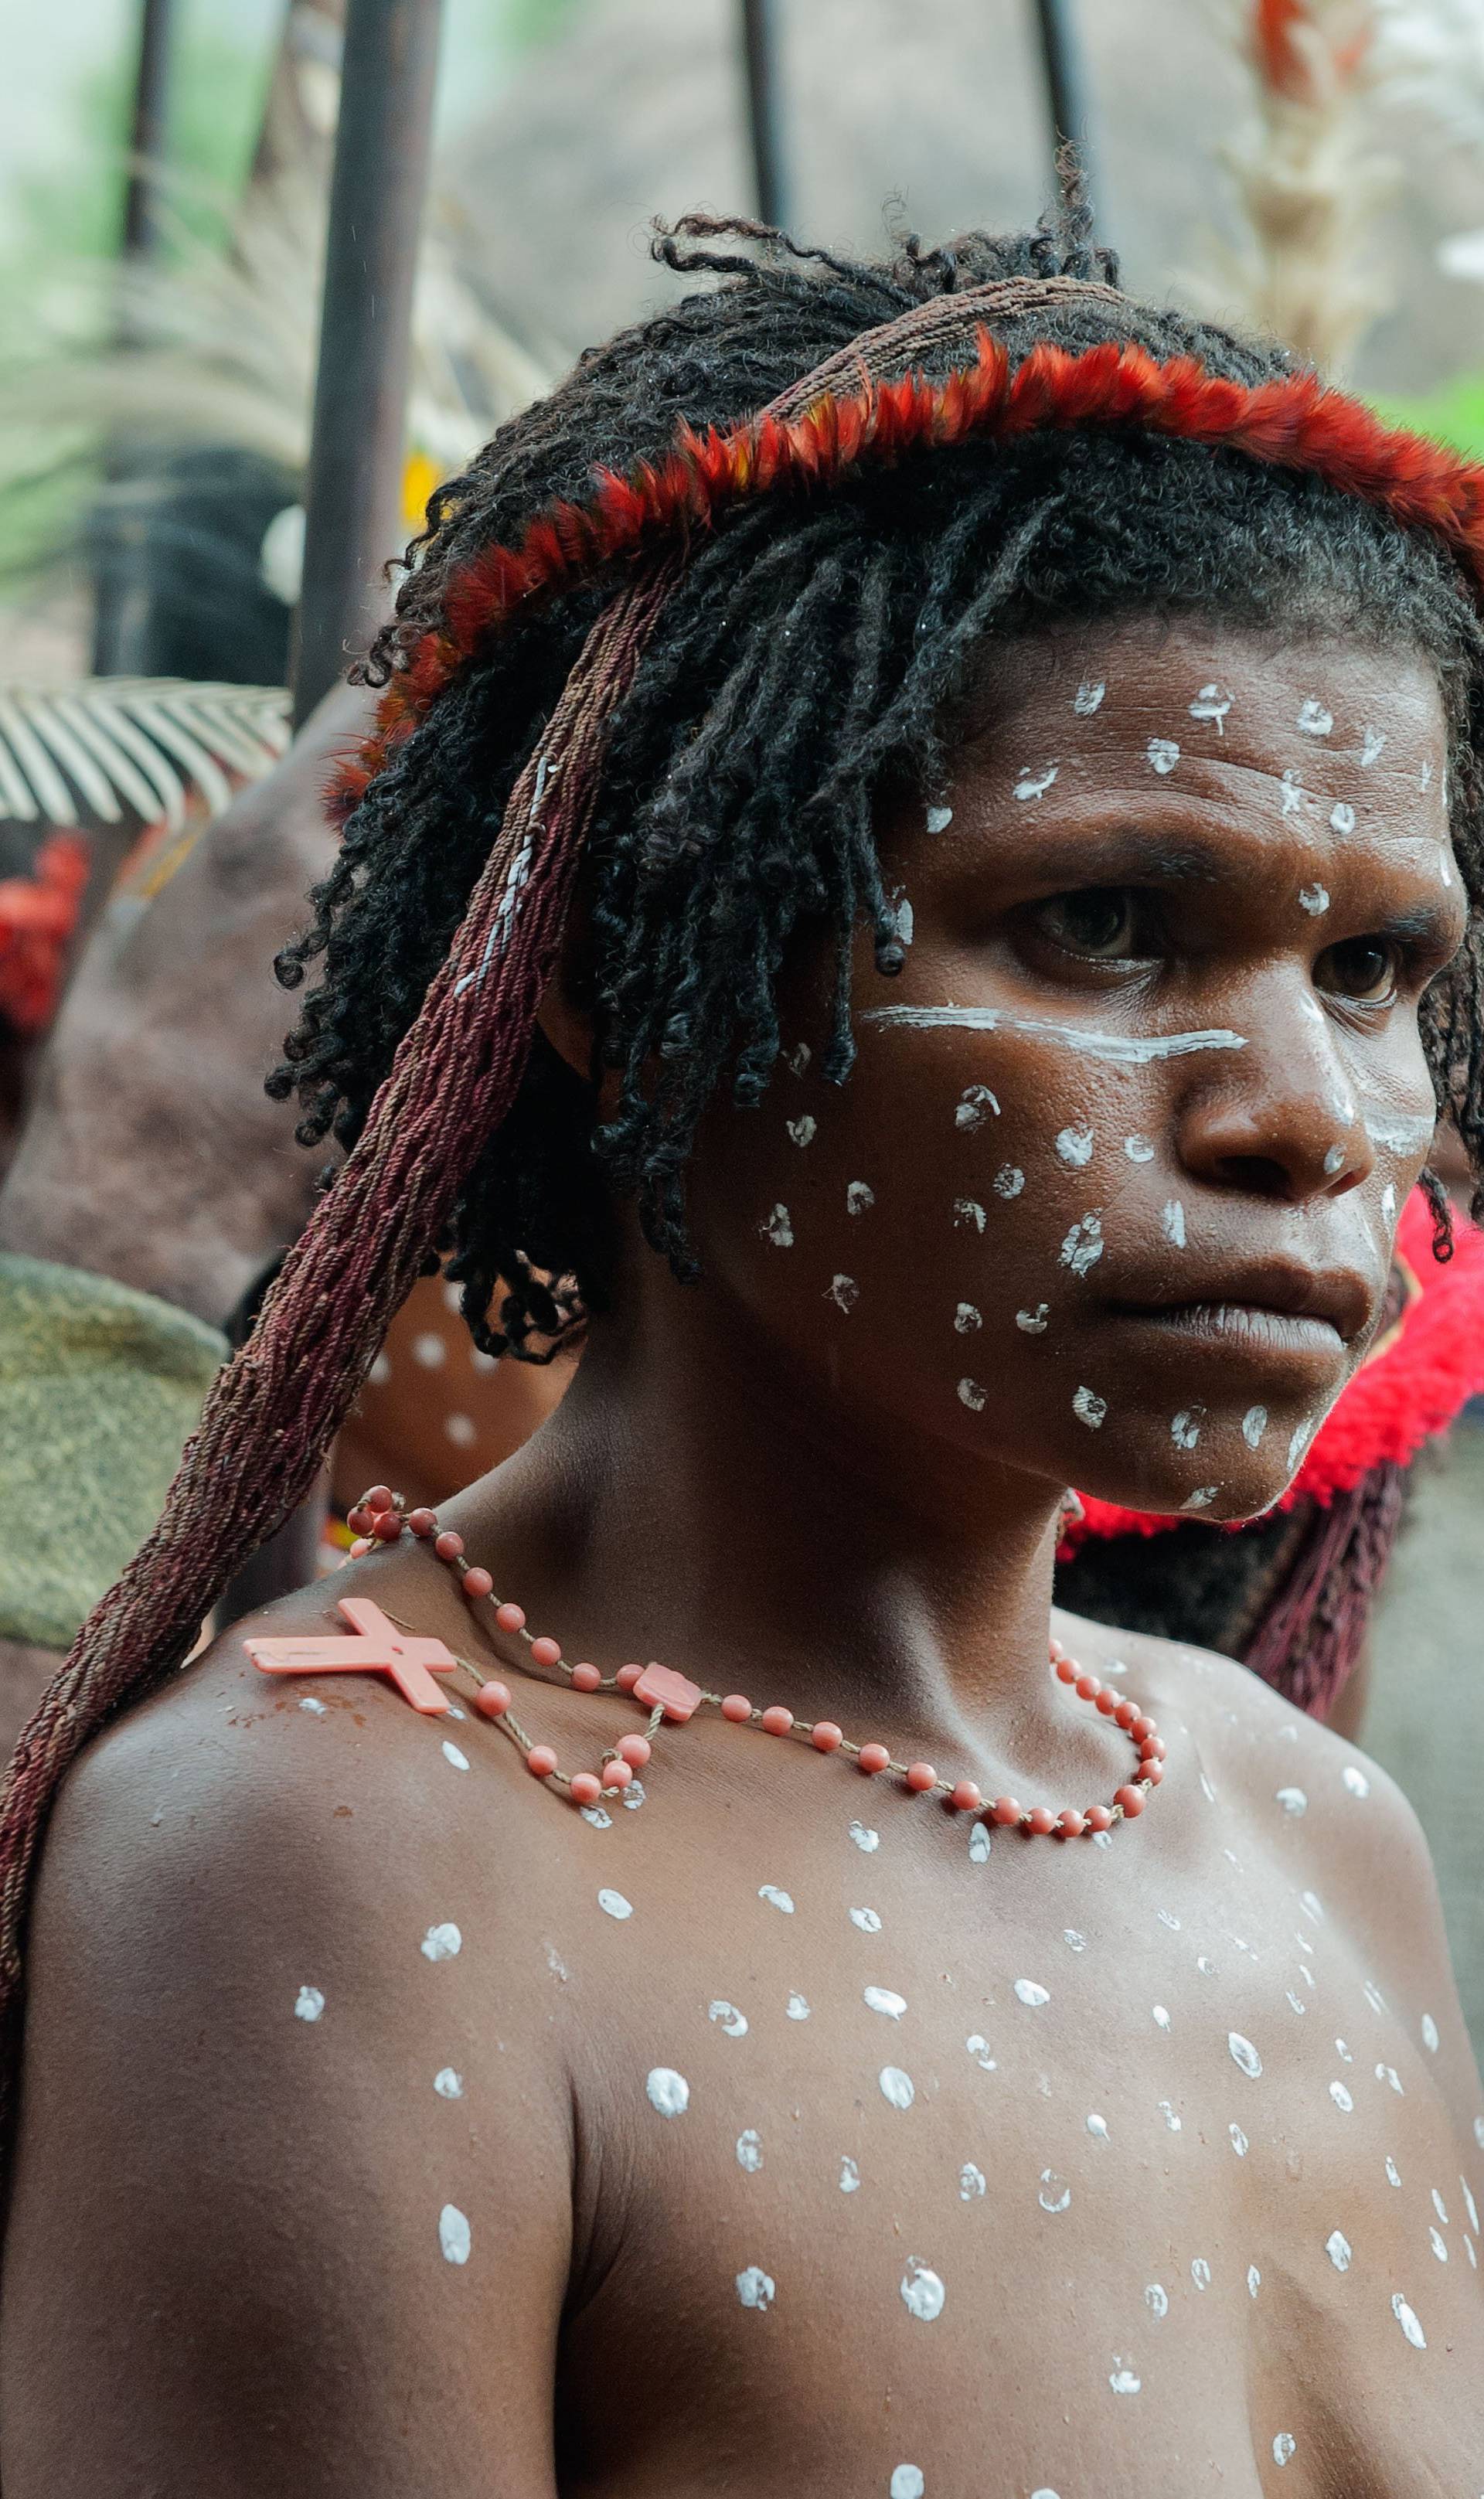 Woman and oldman of a new Guinean tribe Dugum Dani